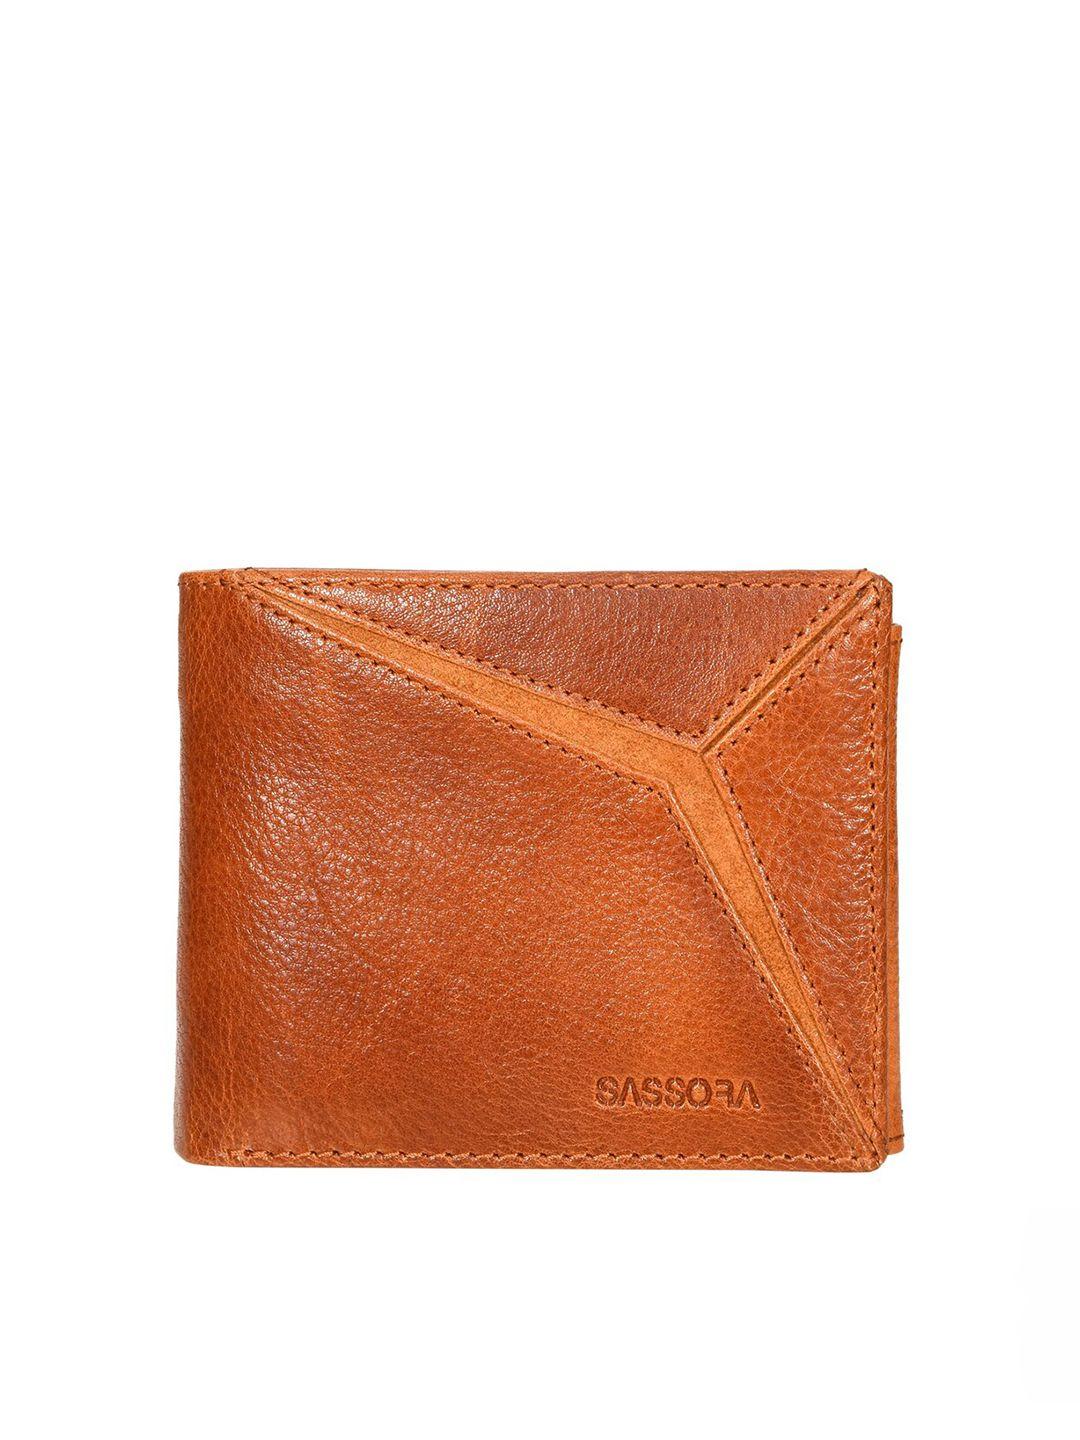 sassora men cut work leather two fold wallet